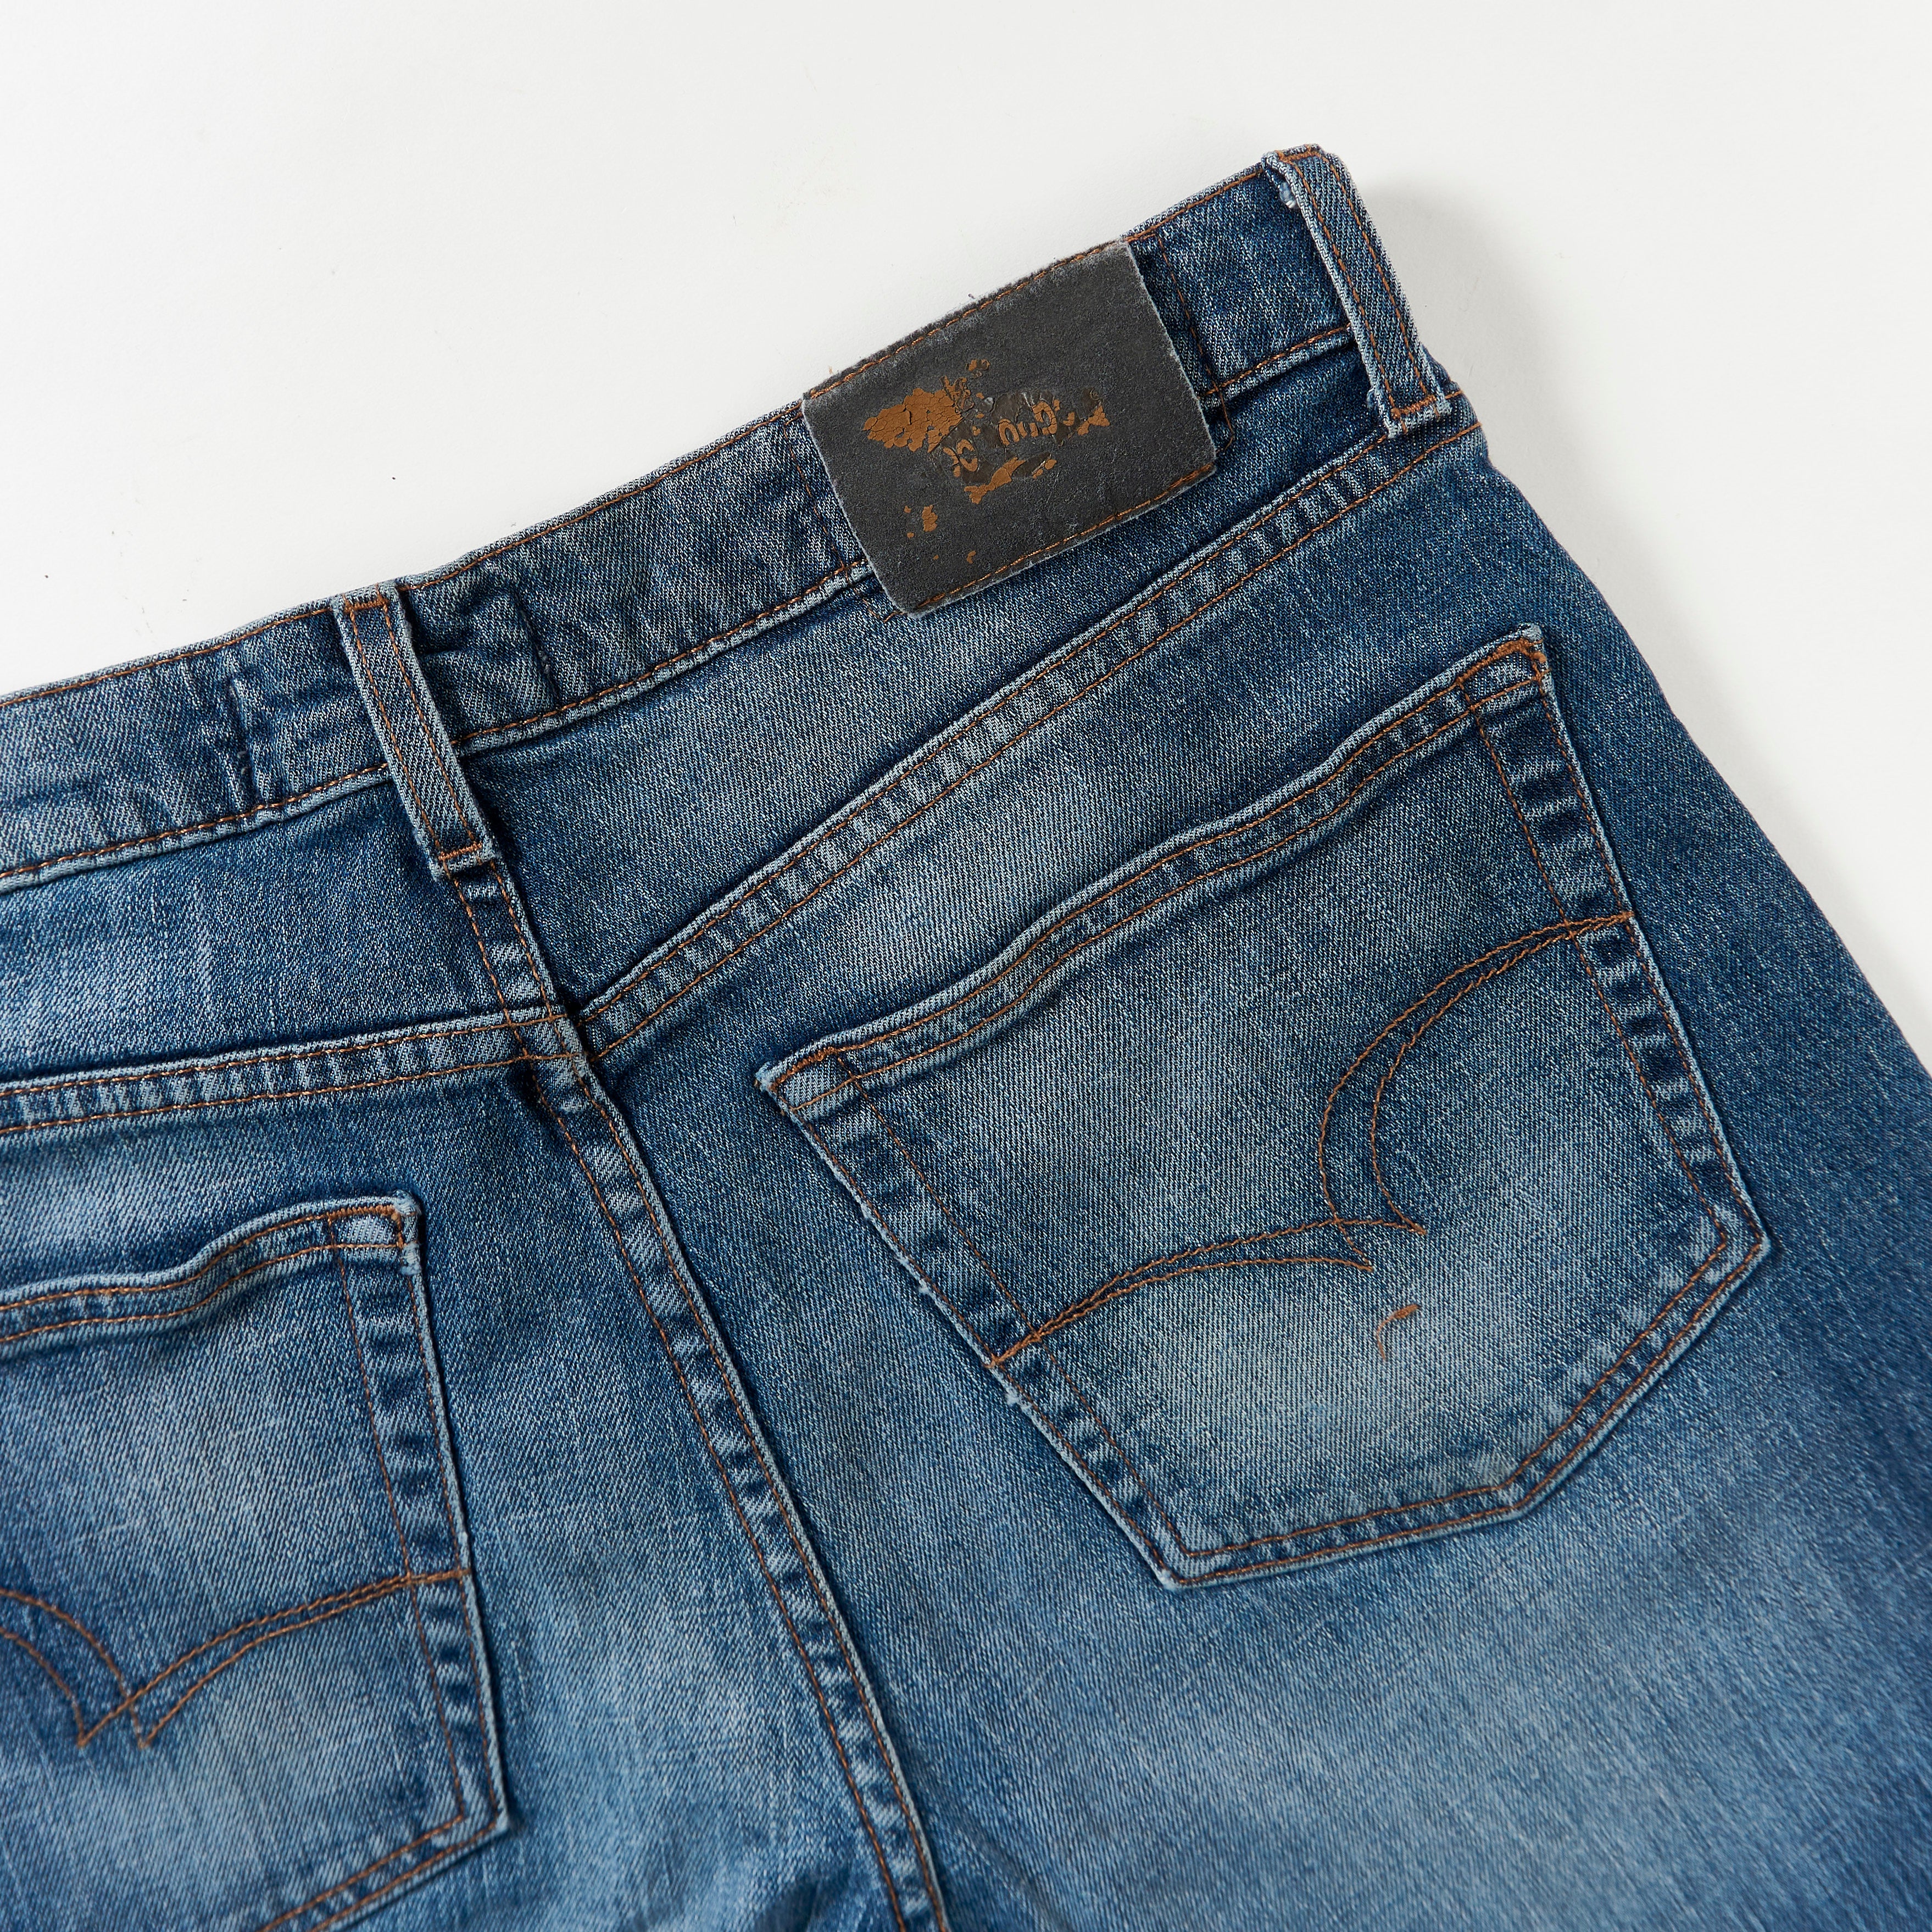 Discover 179+ lee cooper jeans for men